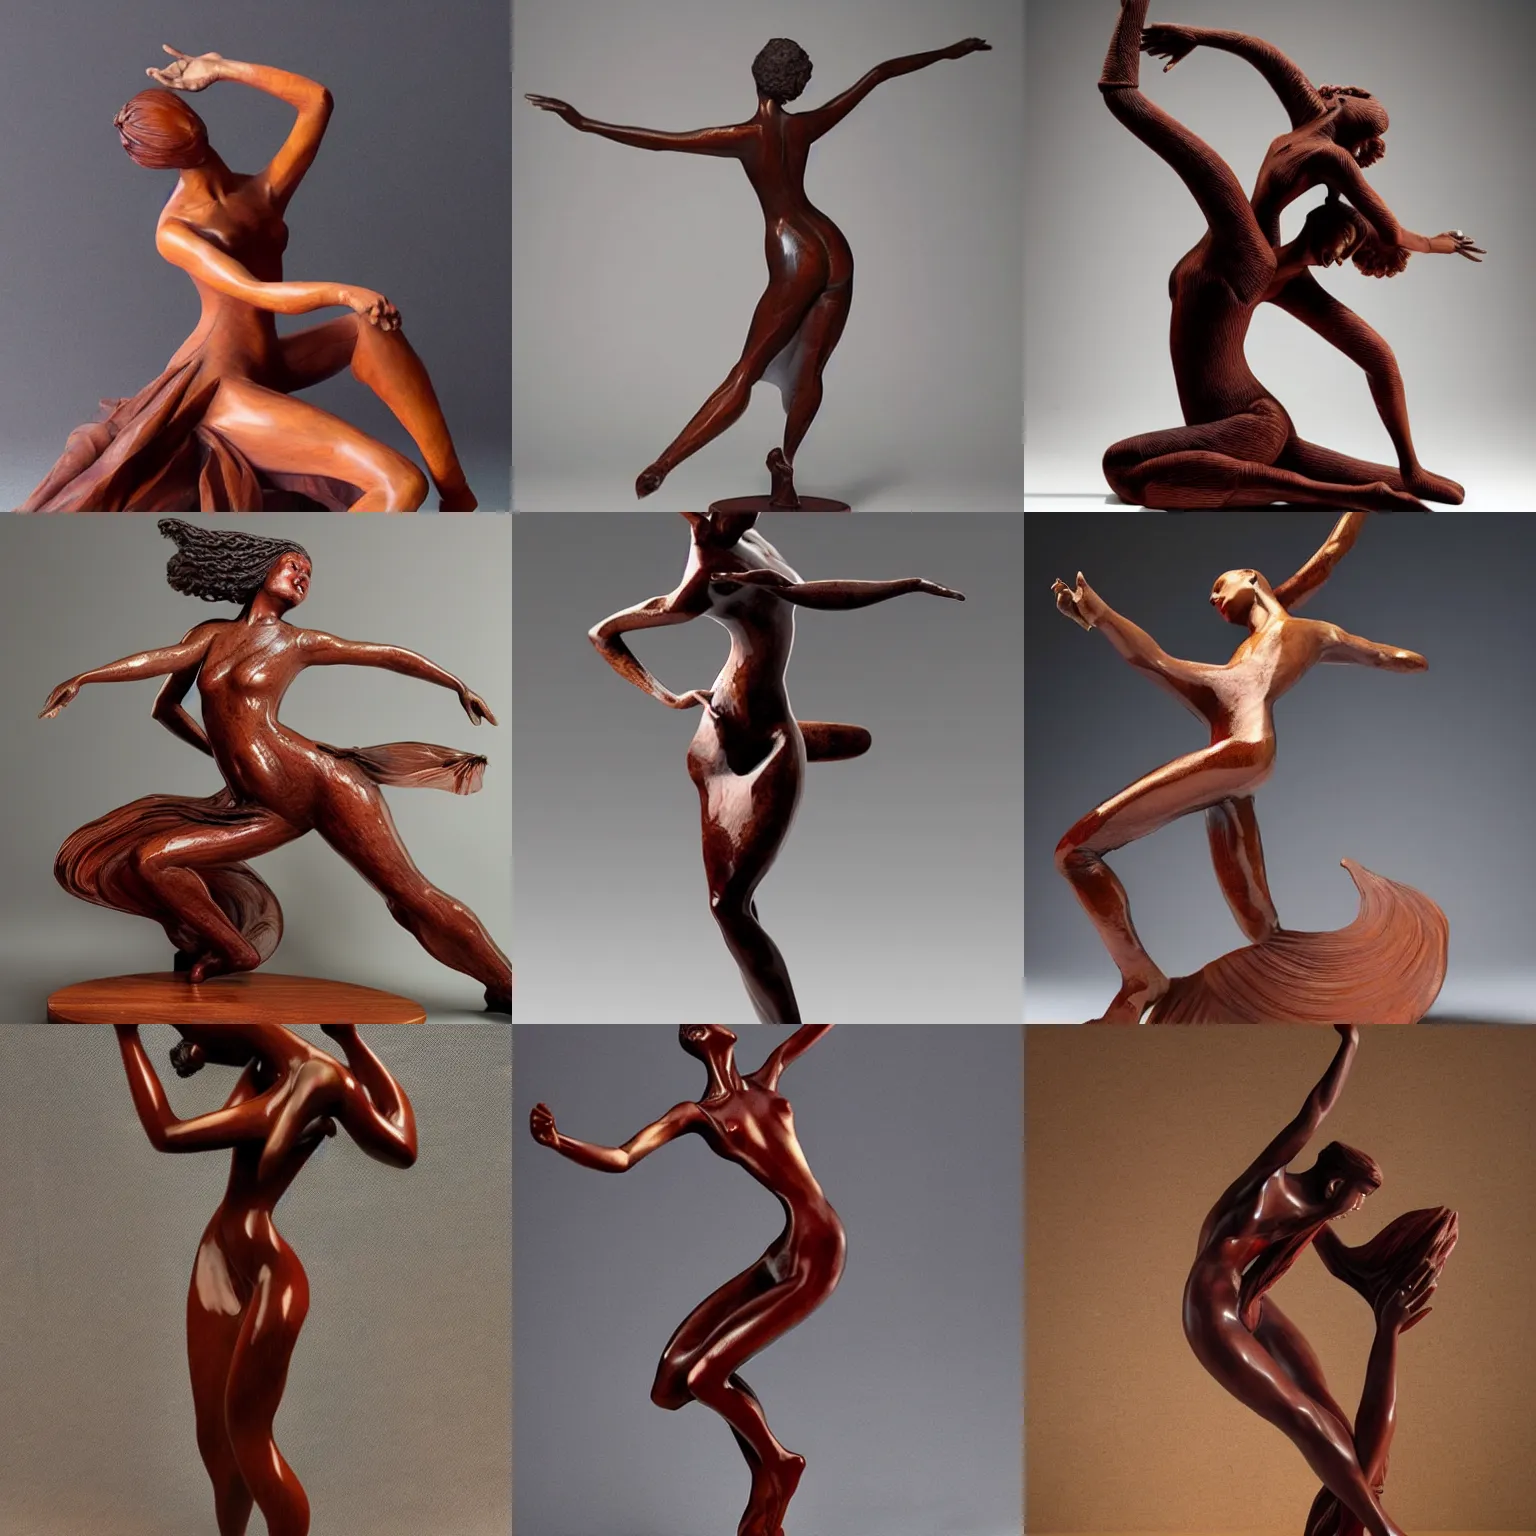 Prompt: mahogany figure sculpture depicting delicate dancing woman, by karol bak and filip hodas